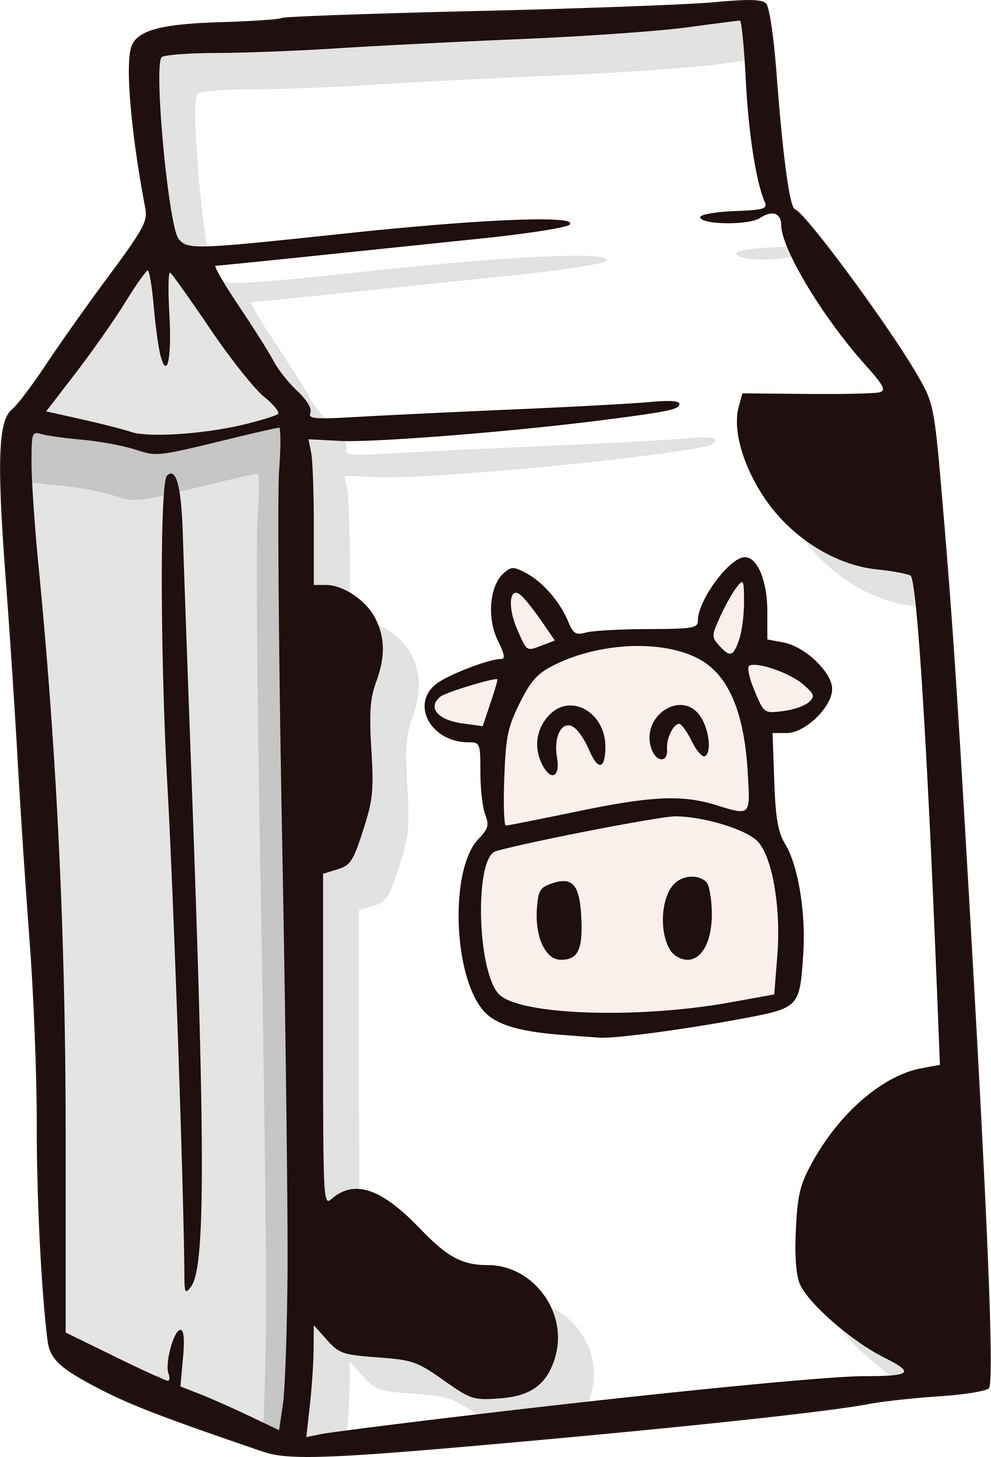 Cow milk carton drawing